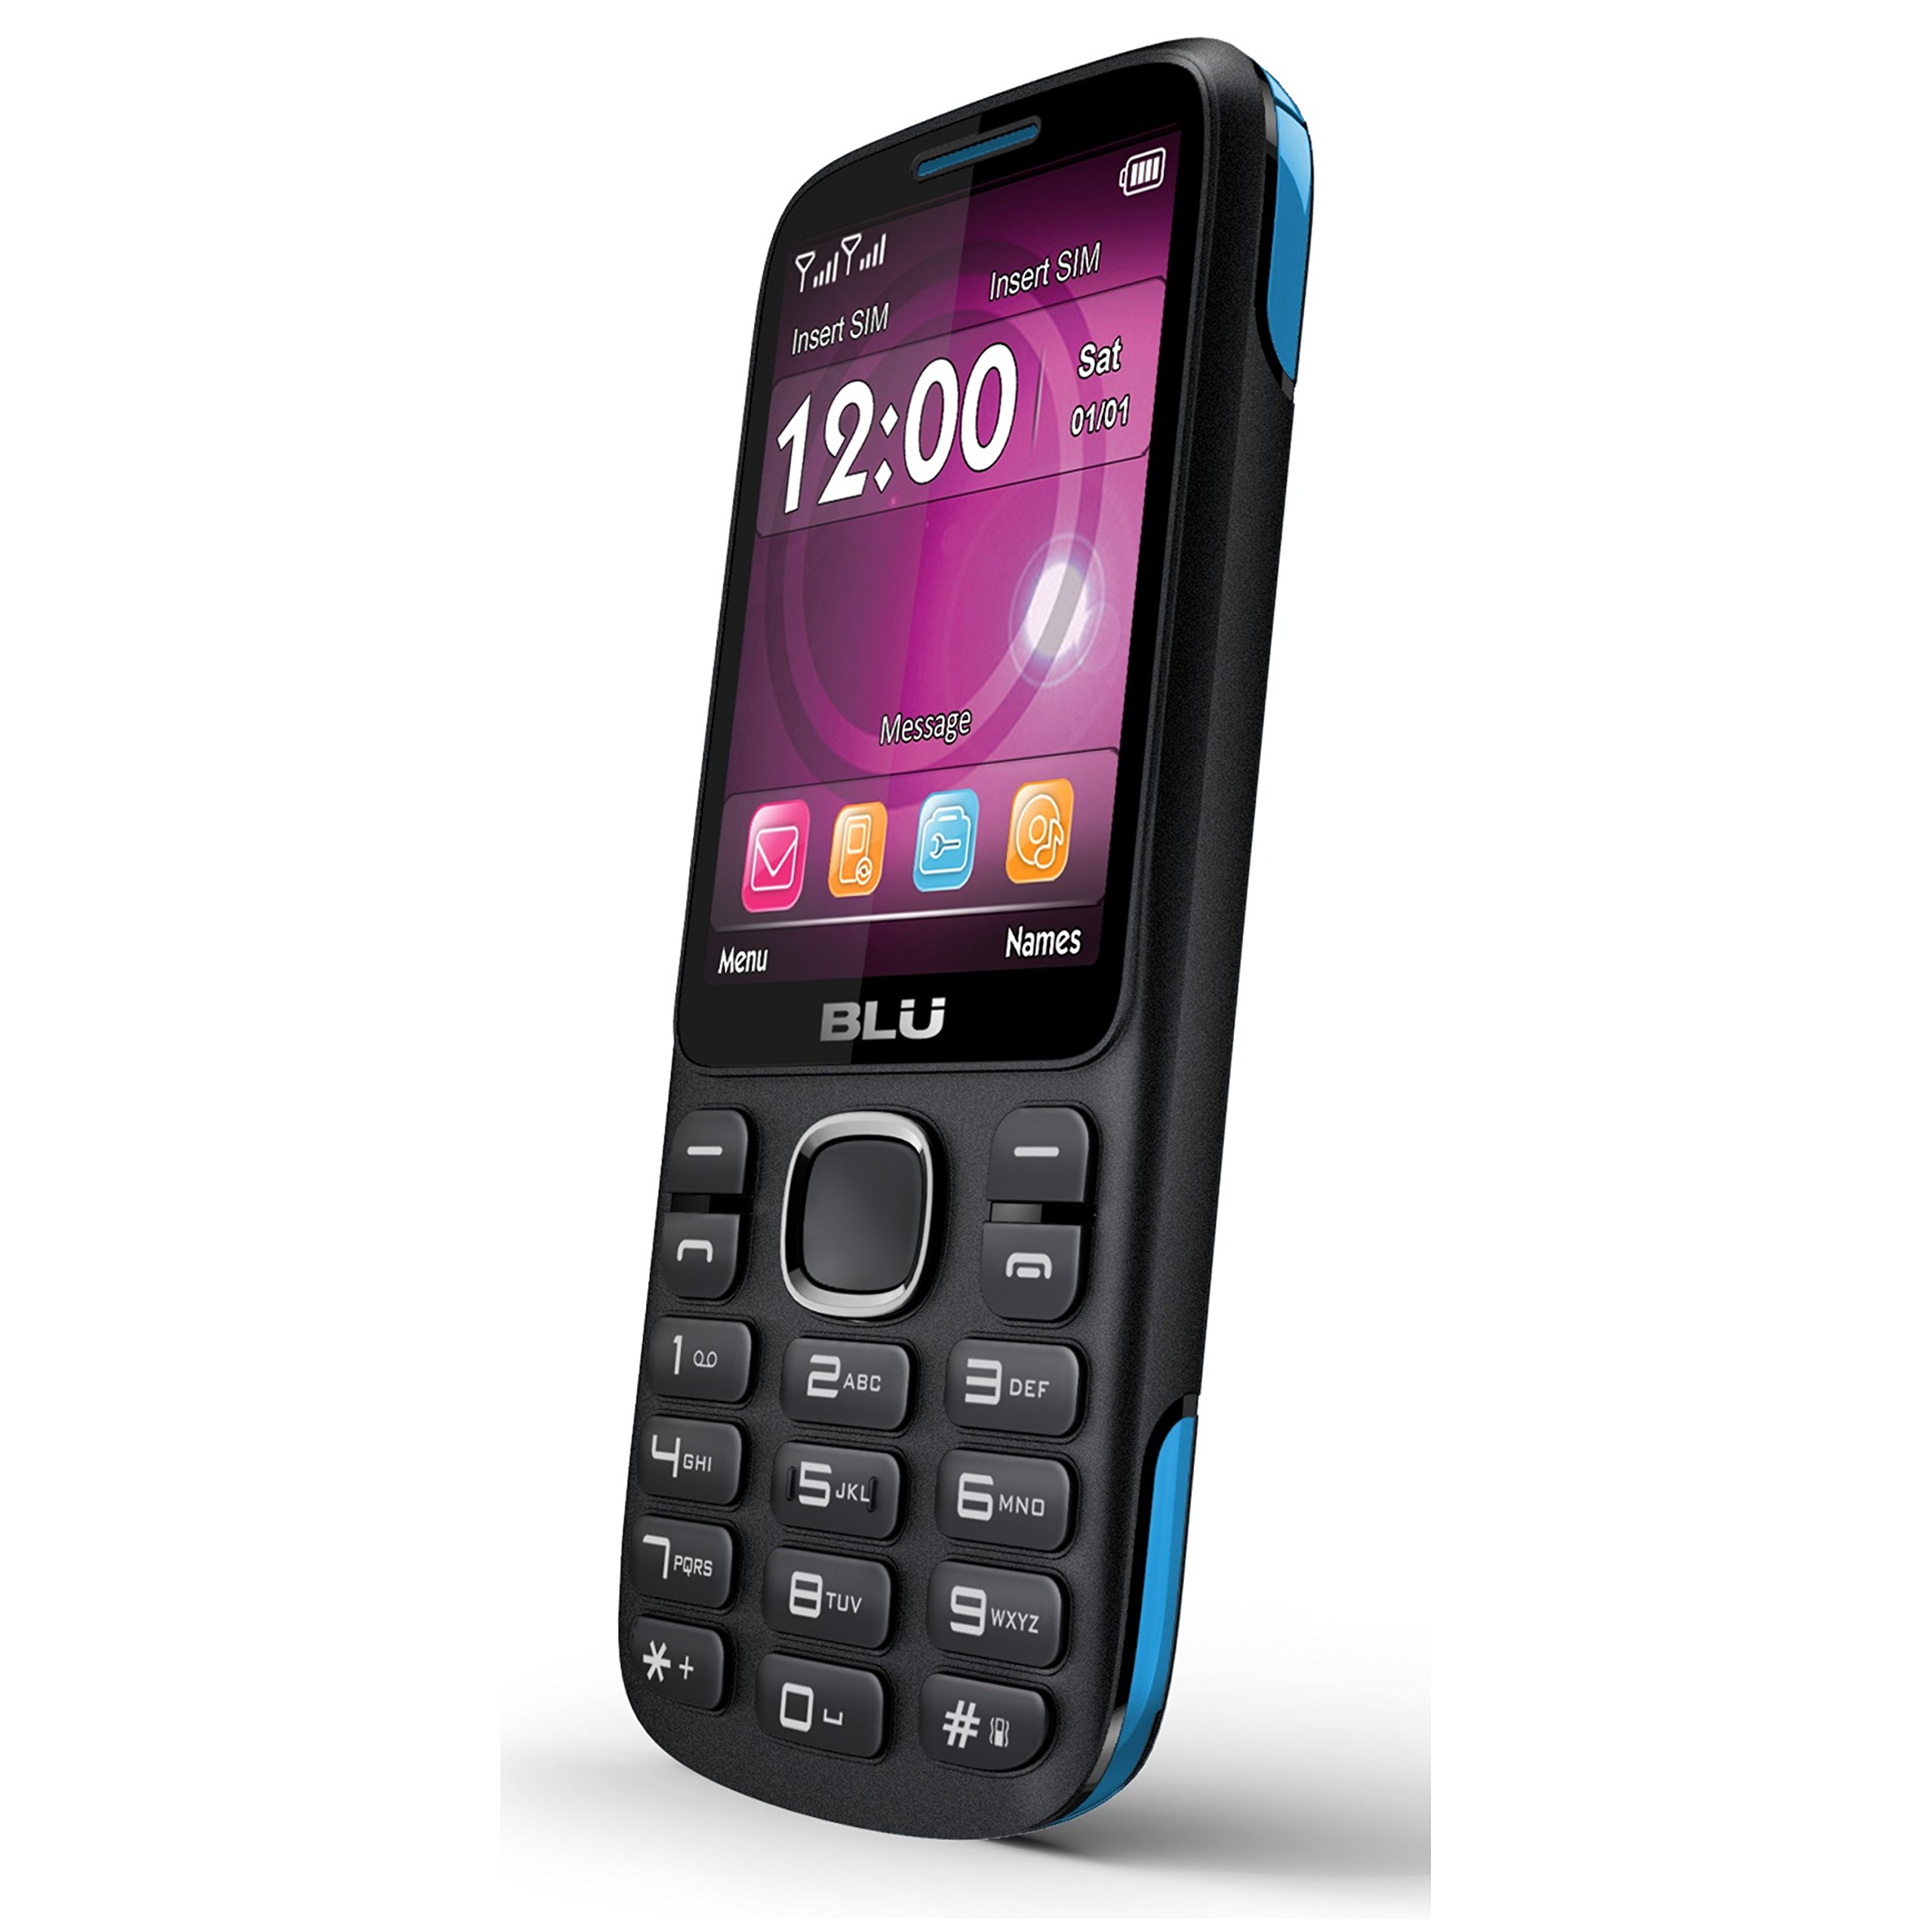 BLU Jenny TV 2.8 T276T Unlocked GSM Dual-SIM Cell Phone w/ 1.3MP Camera - Unlocked Cell Phones - Retail Packaging - Black Blue